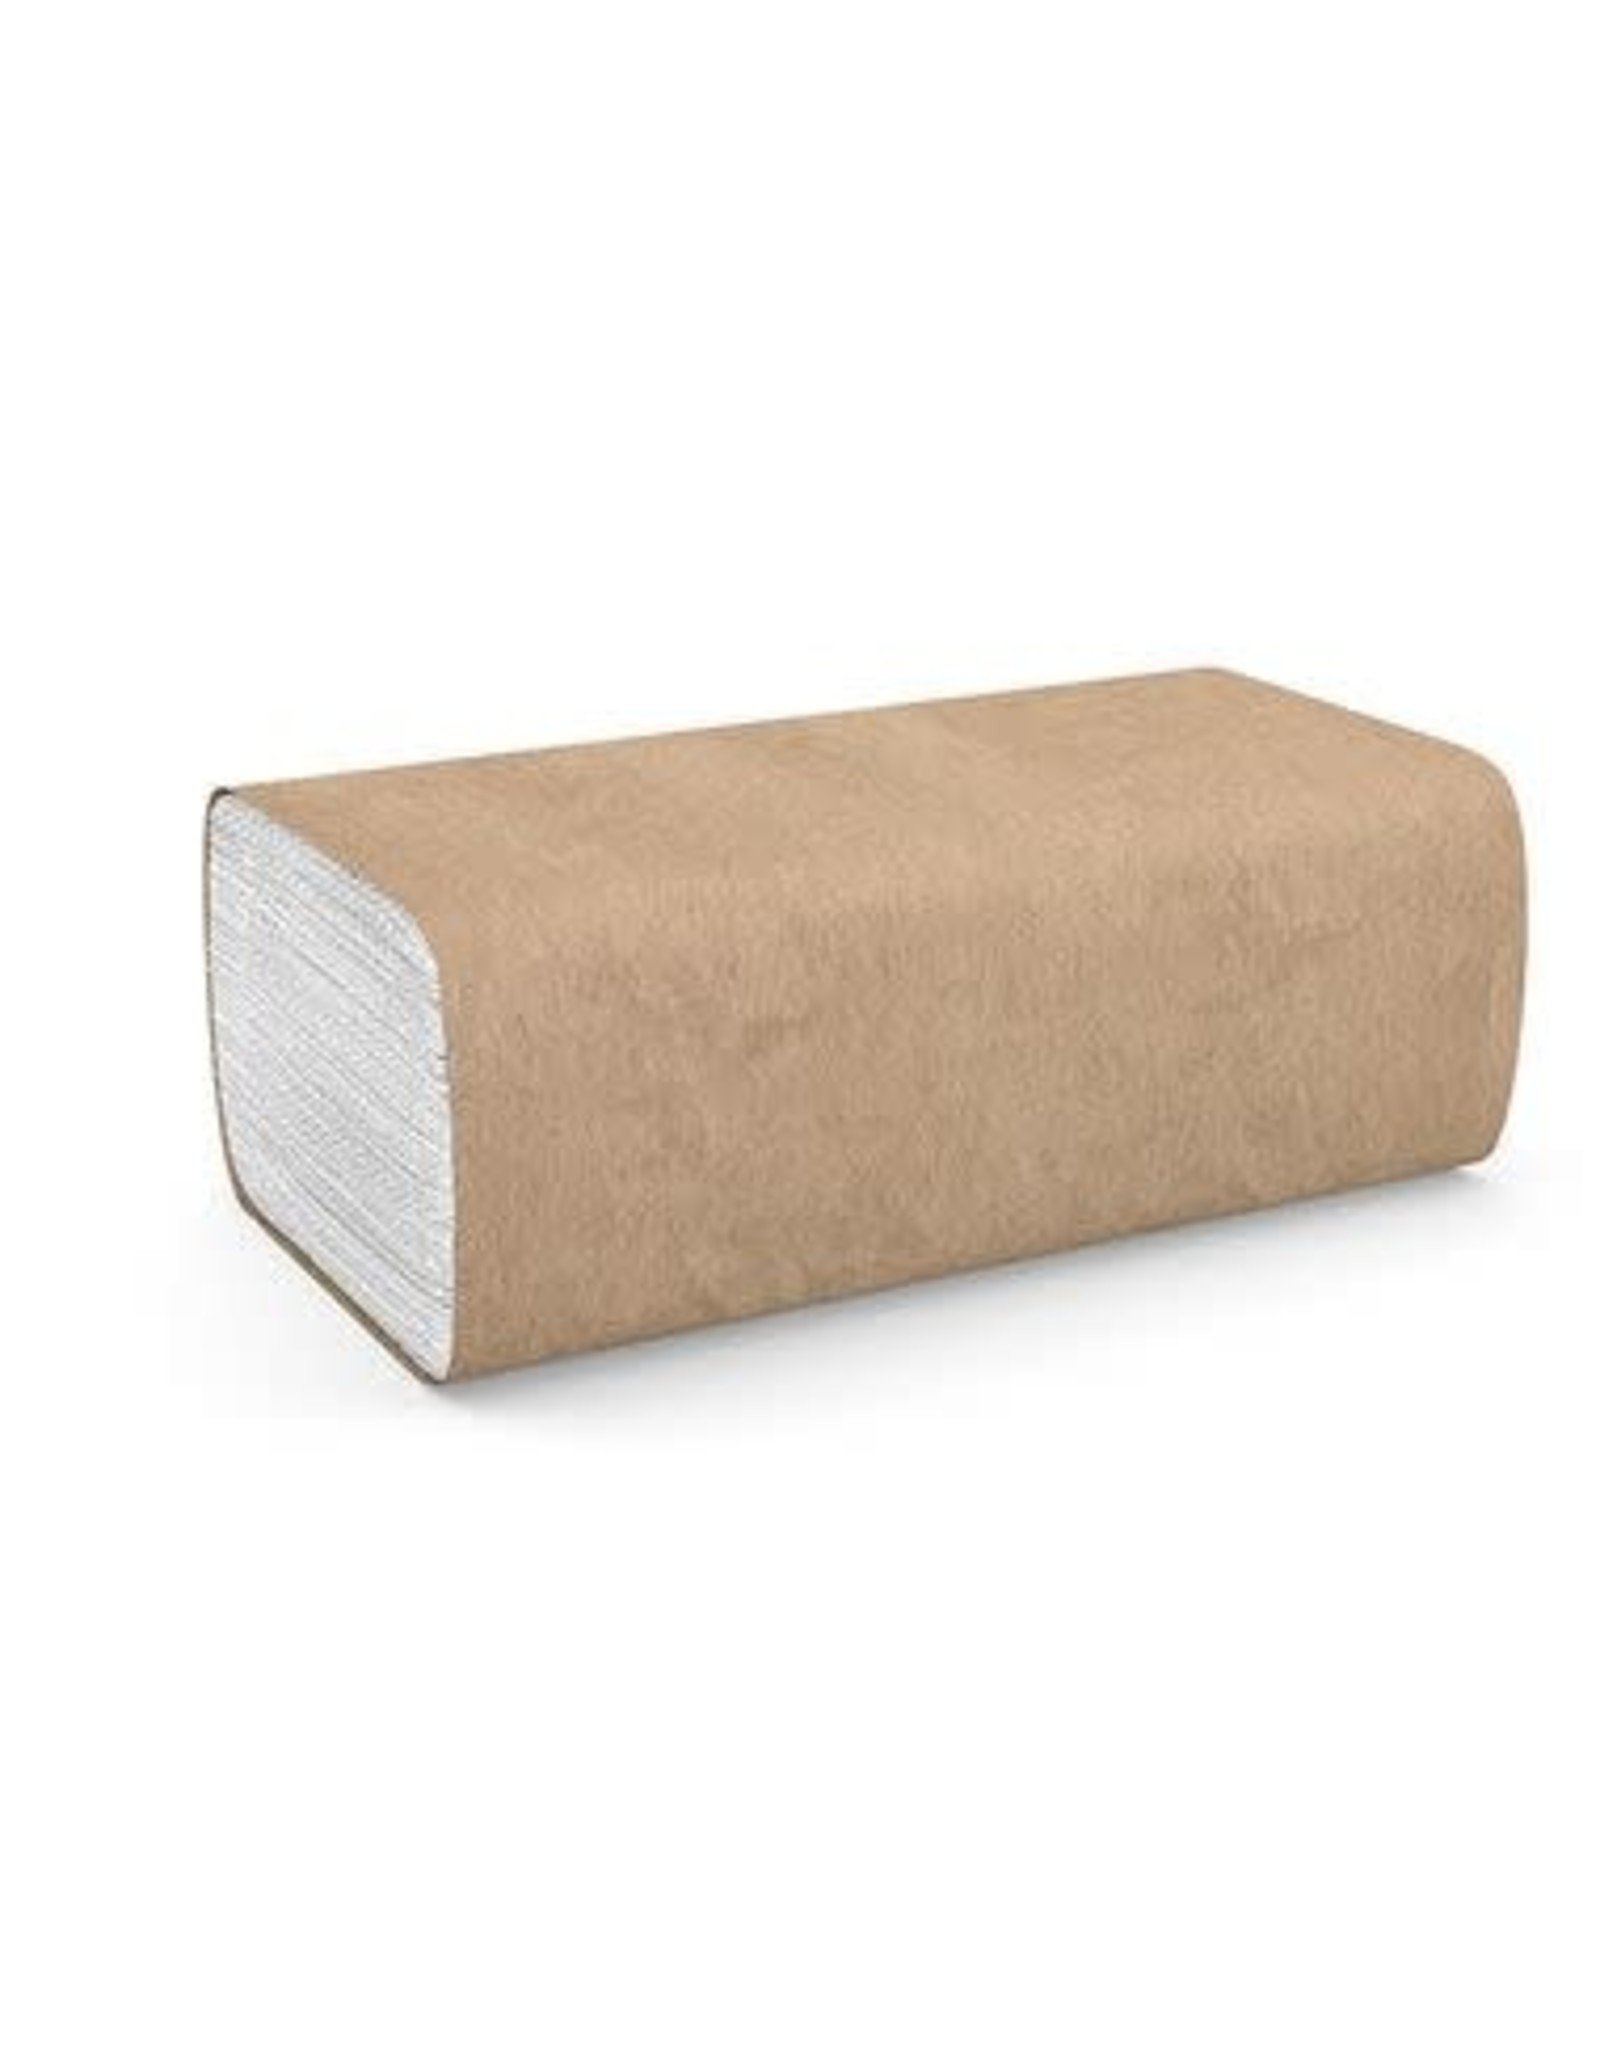 Evolv Single fold Paper Towel - White, 250/pk, 16 pk/Case